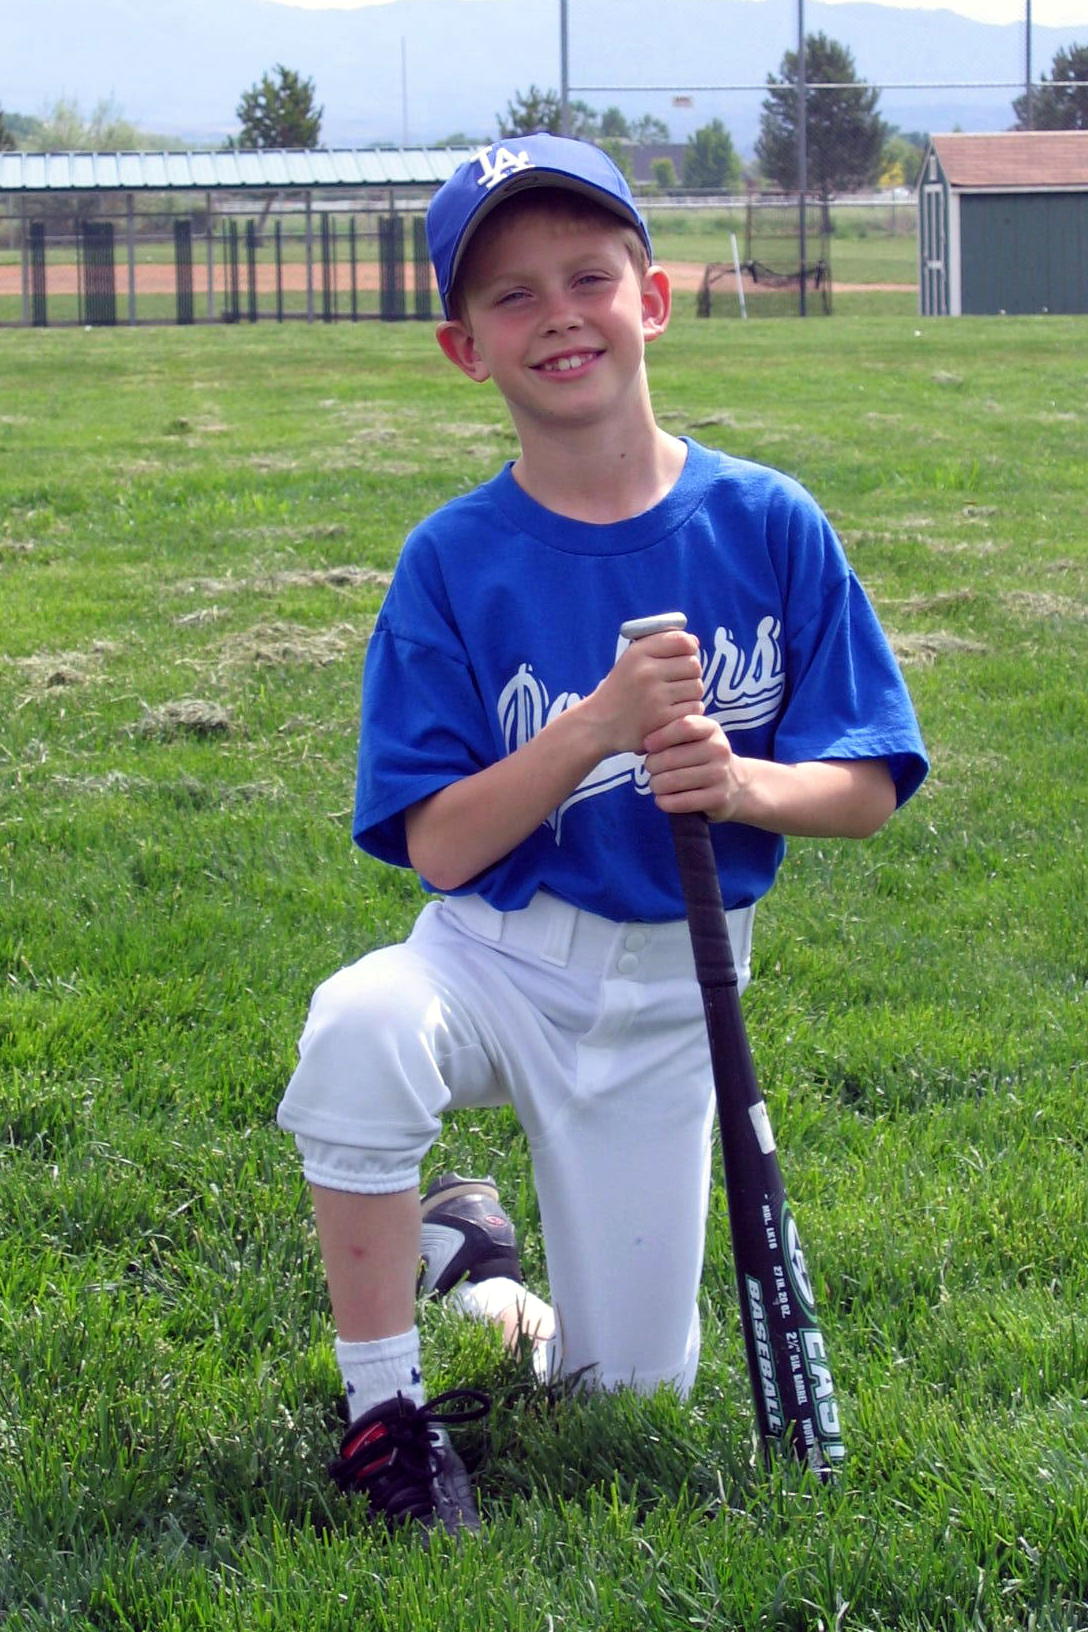 a boy in blue uniform with baseball bat and glove